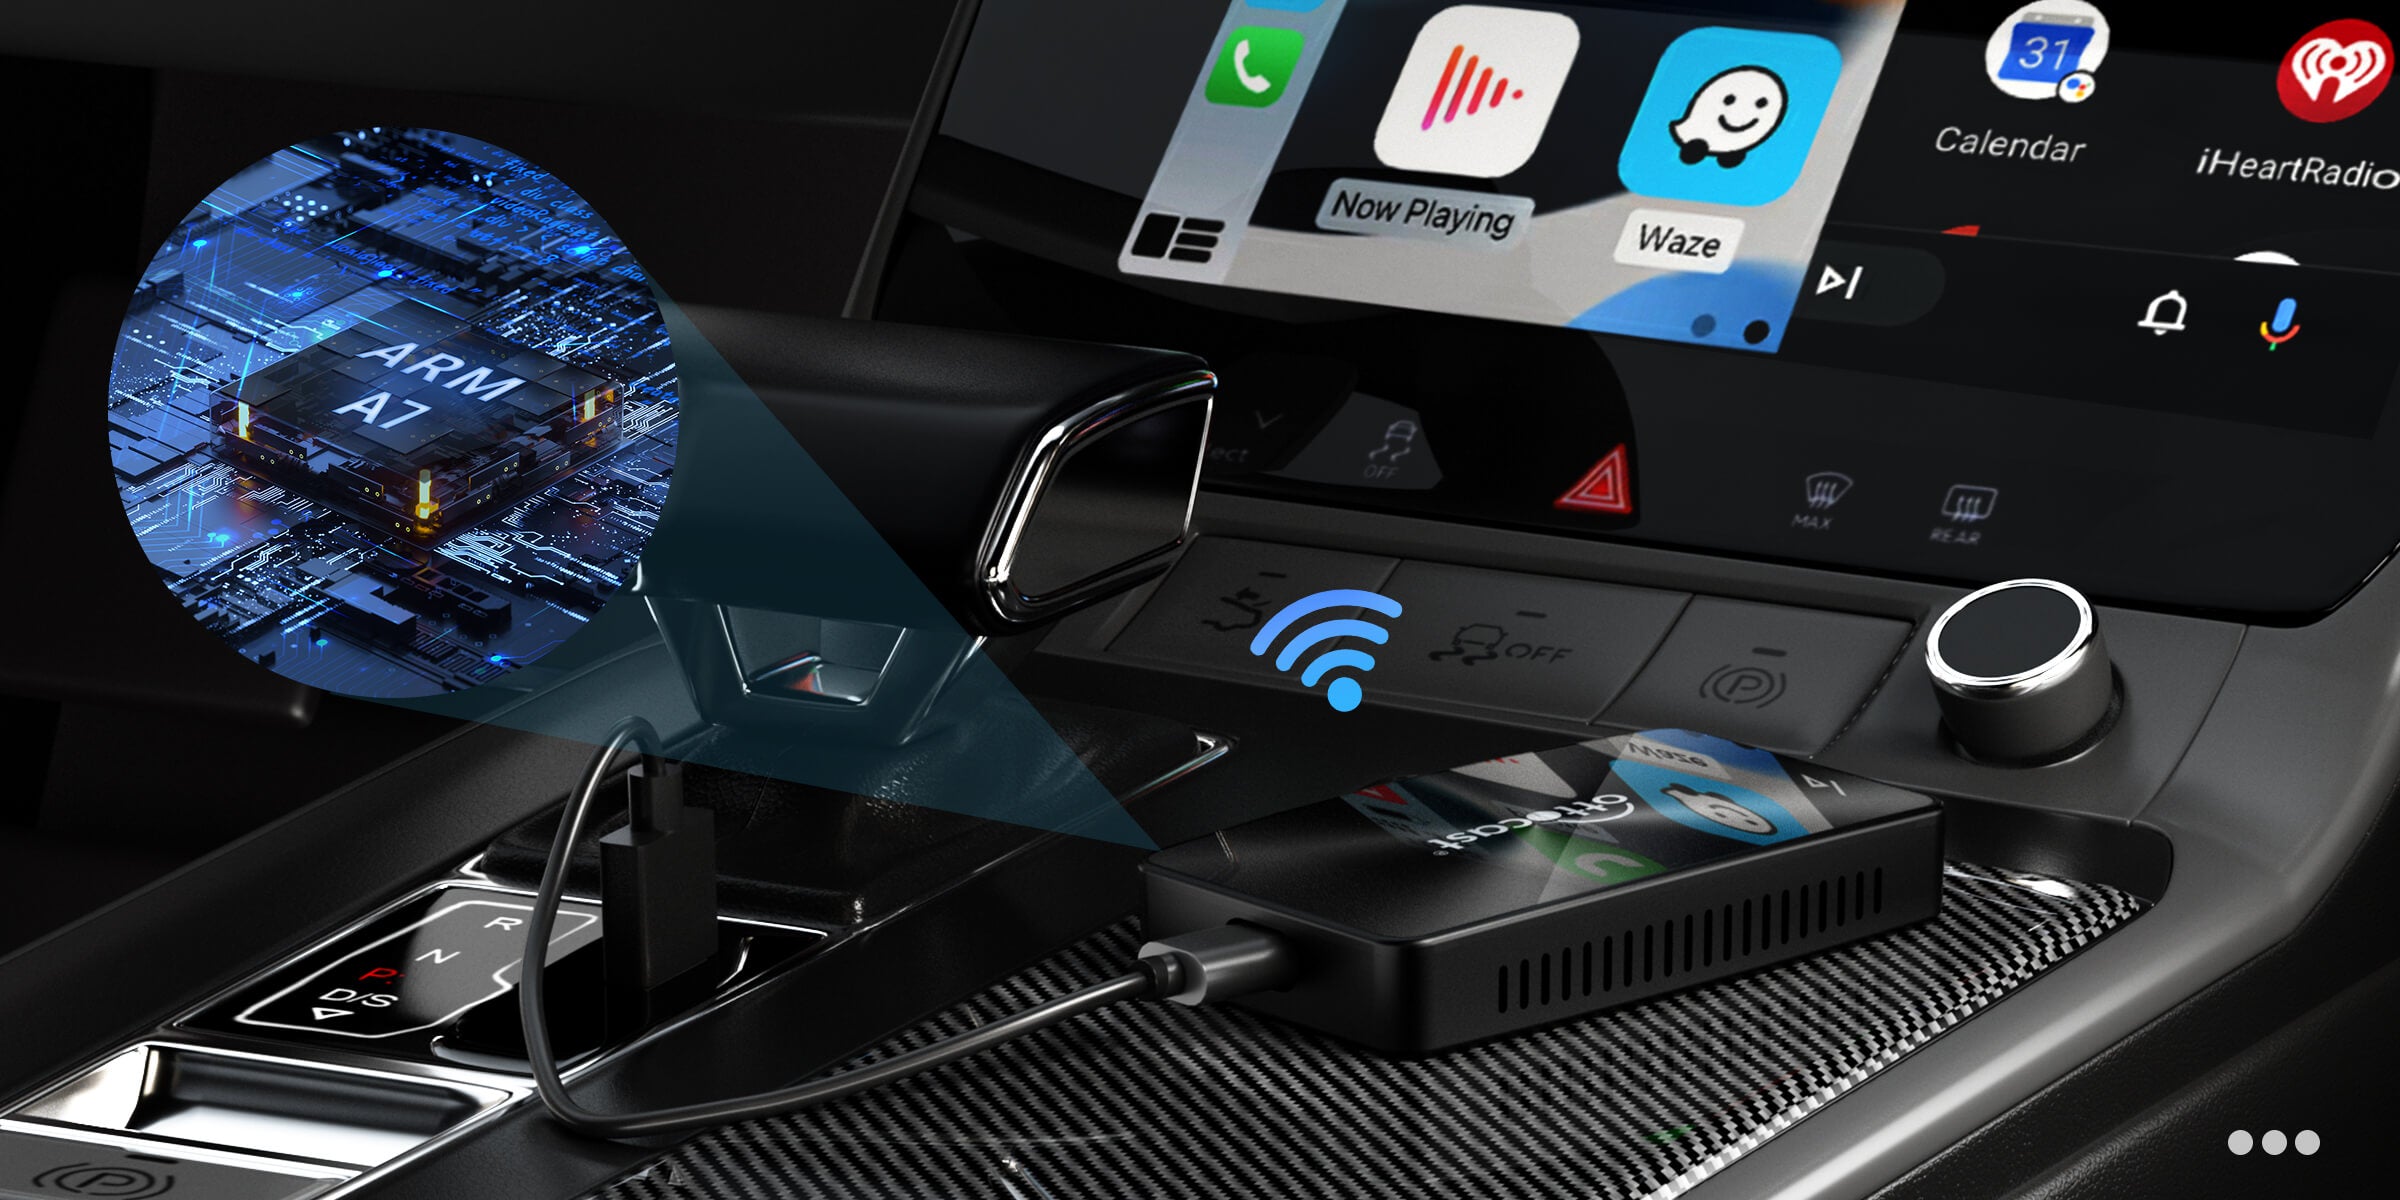 New U2-X Pro Wireless Android Auto/CarPlay 2 in 1 Adapter